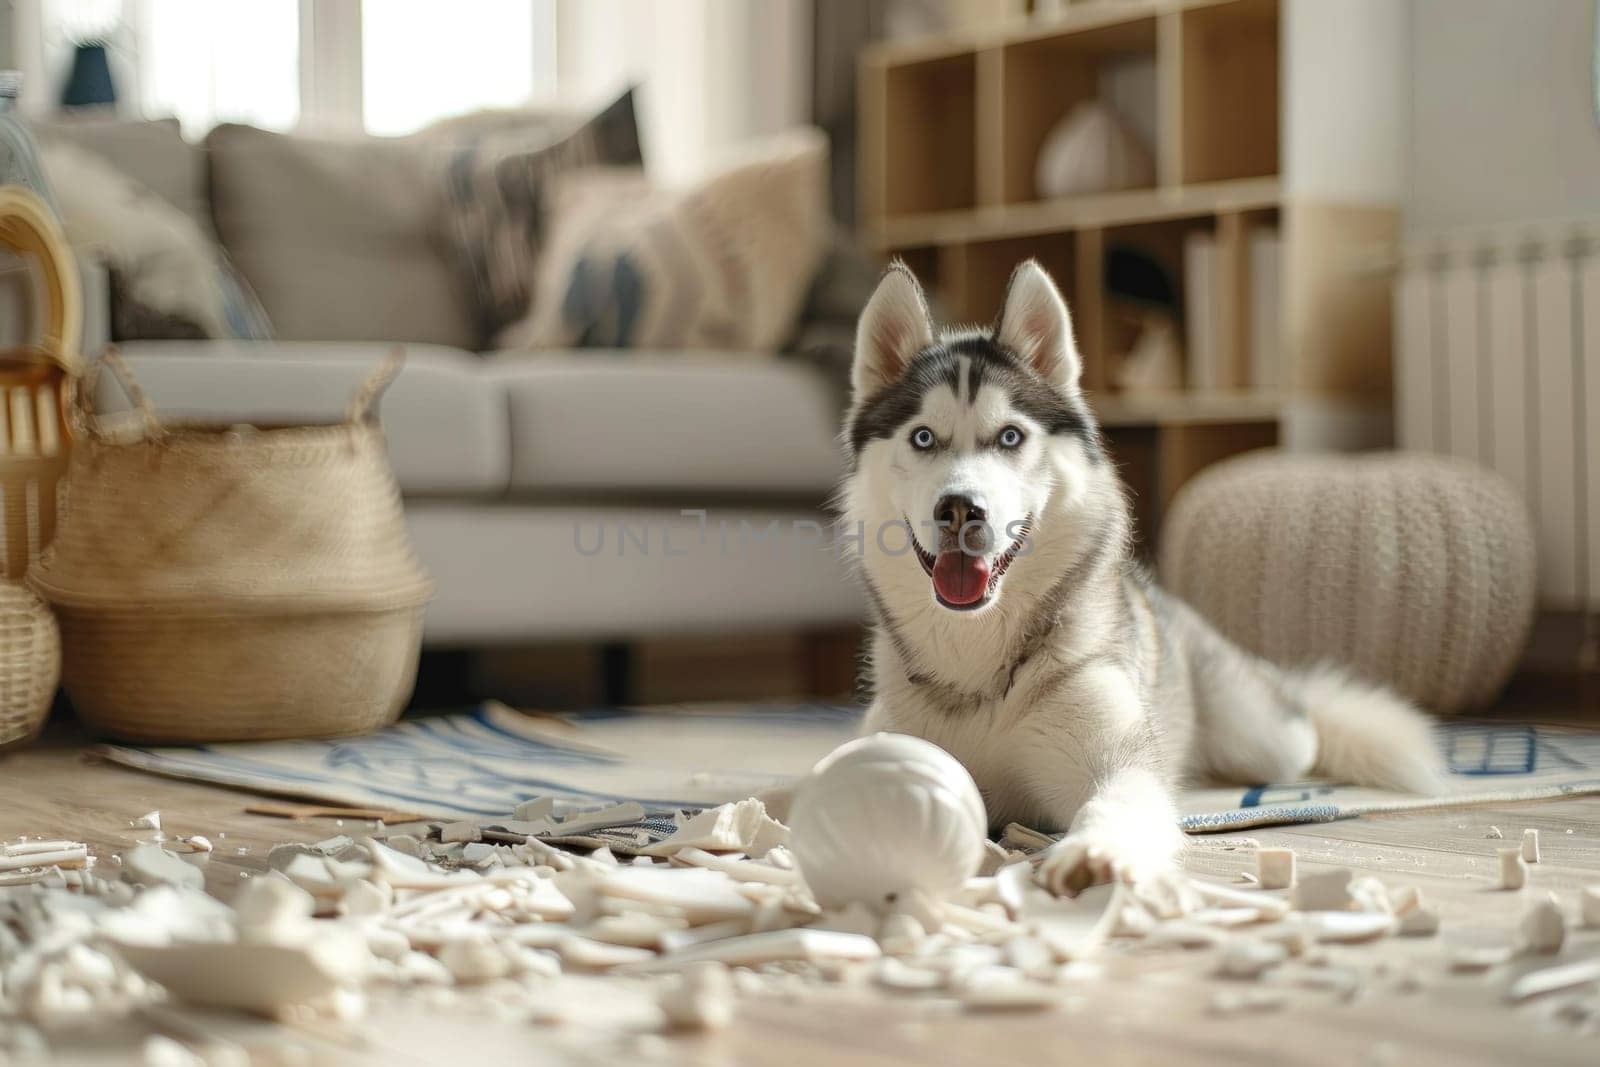 Siberian husky, broken vase fragments of porcelain around the dog in a modern house living room area.